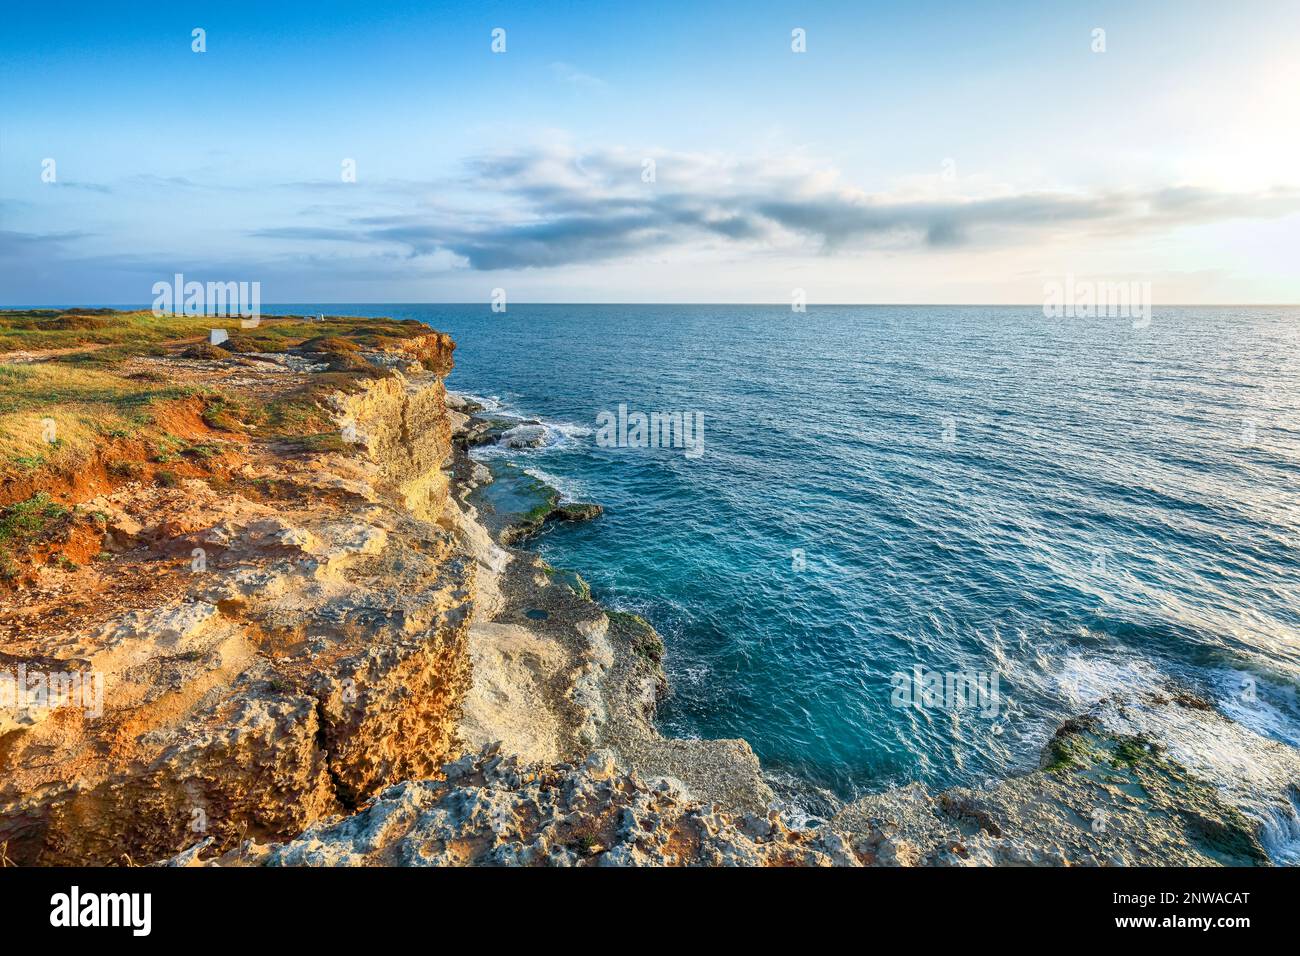 Stunning seascape with cliffs rocky arch and stacks (faraglioni) at Torre Sant Andrea, Salento coast, Puglia region, Italy Stock Photo